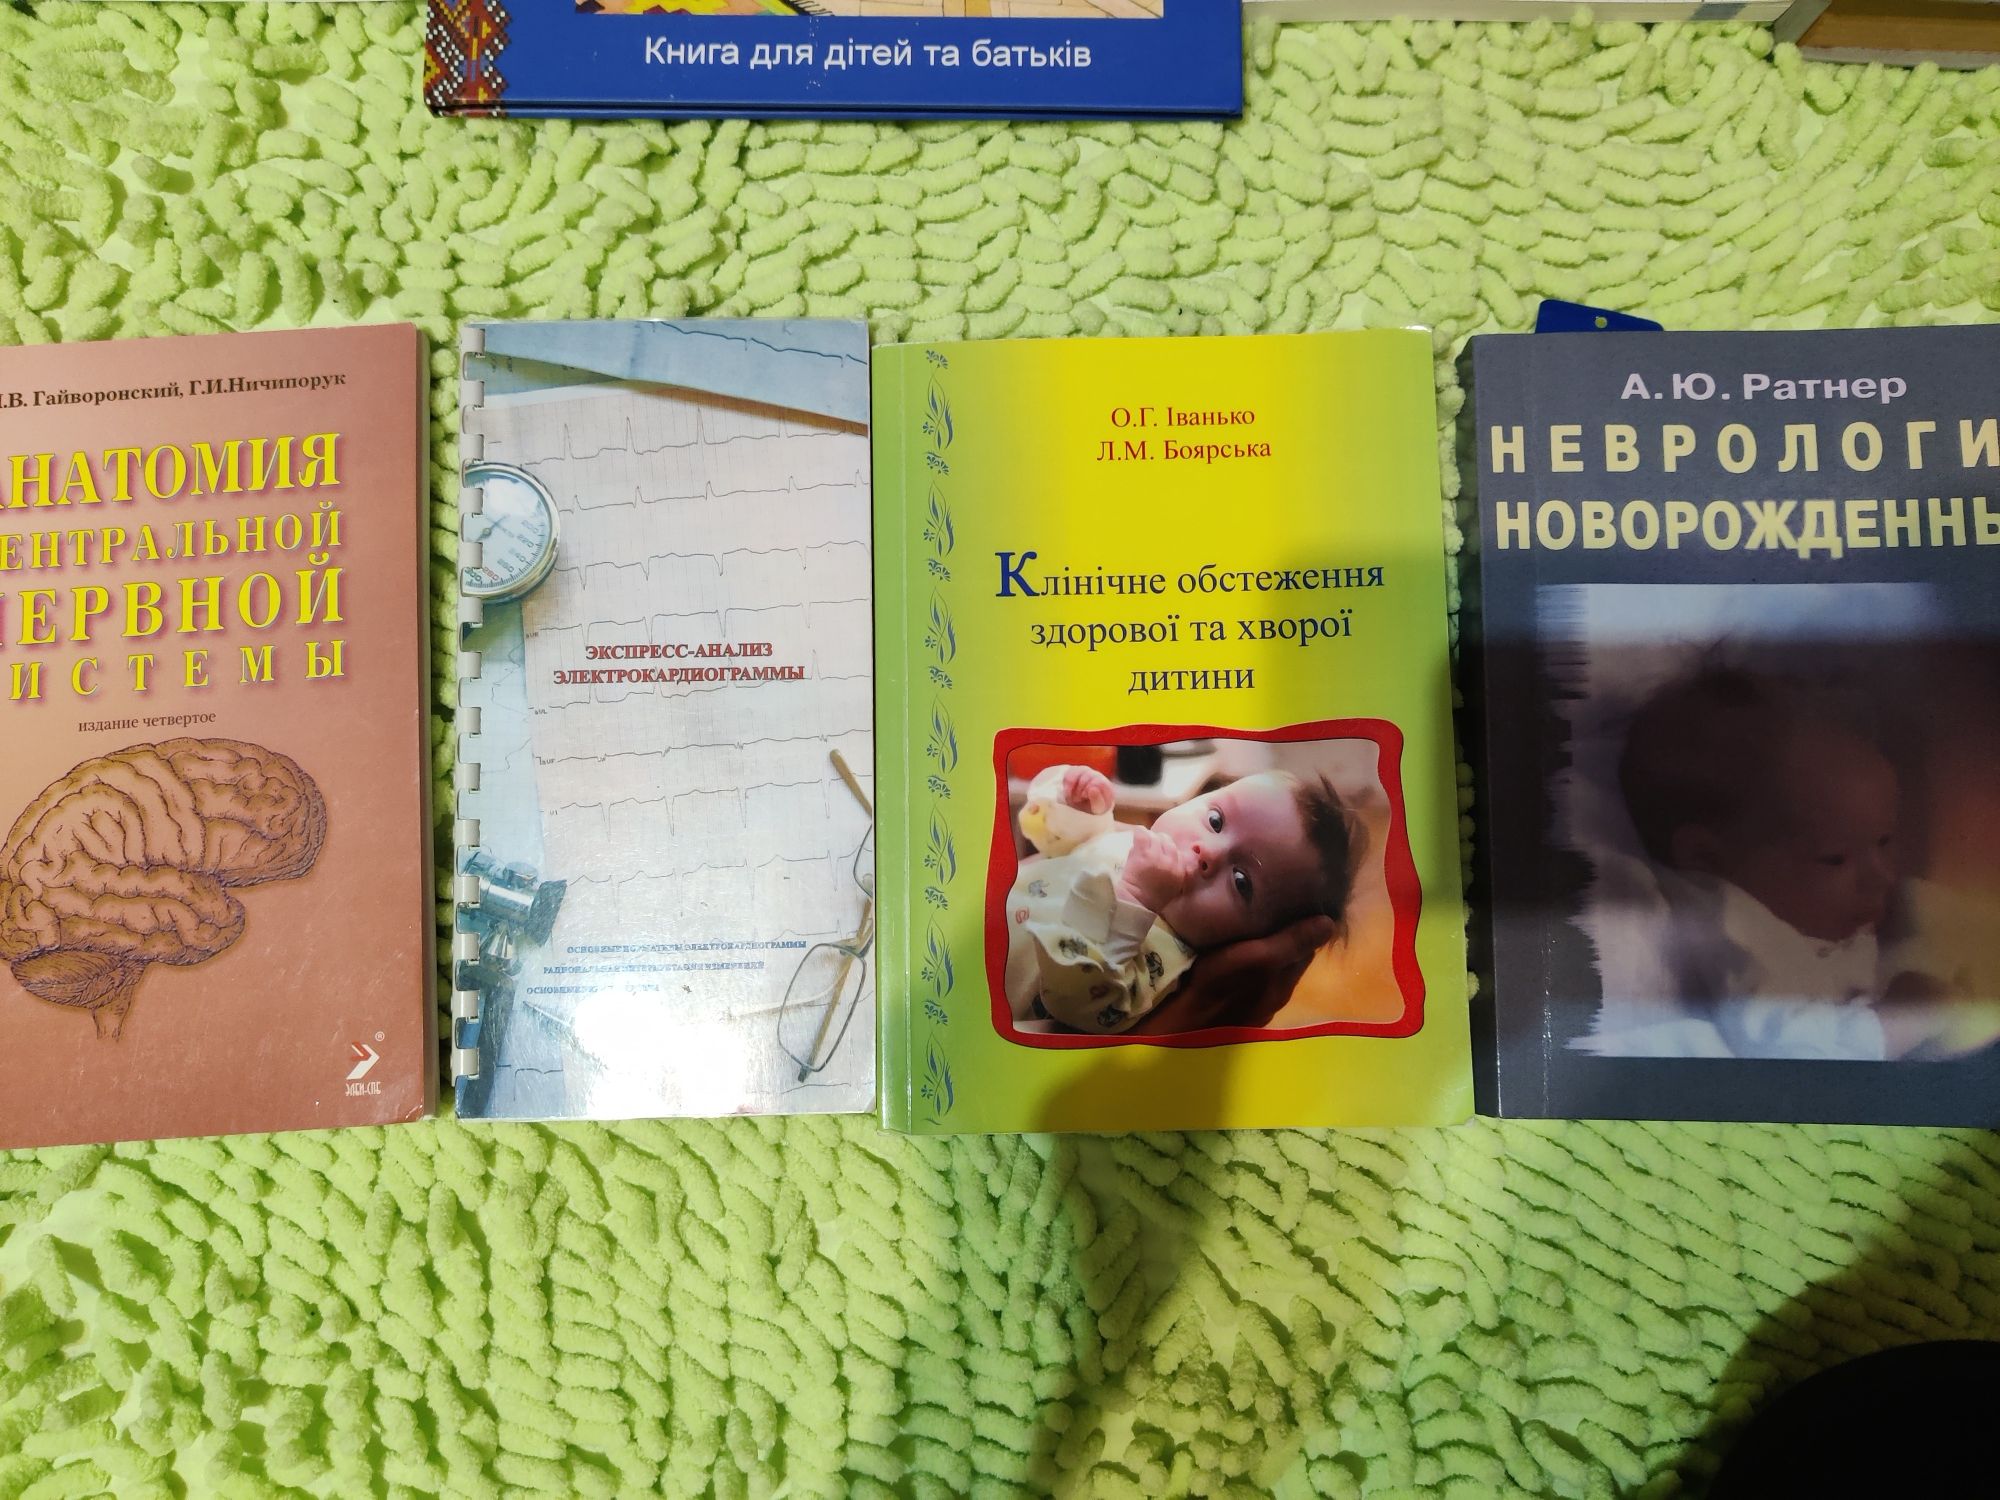 Медицинские книжки медична література медицинские книги